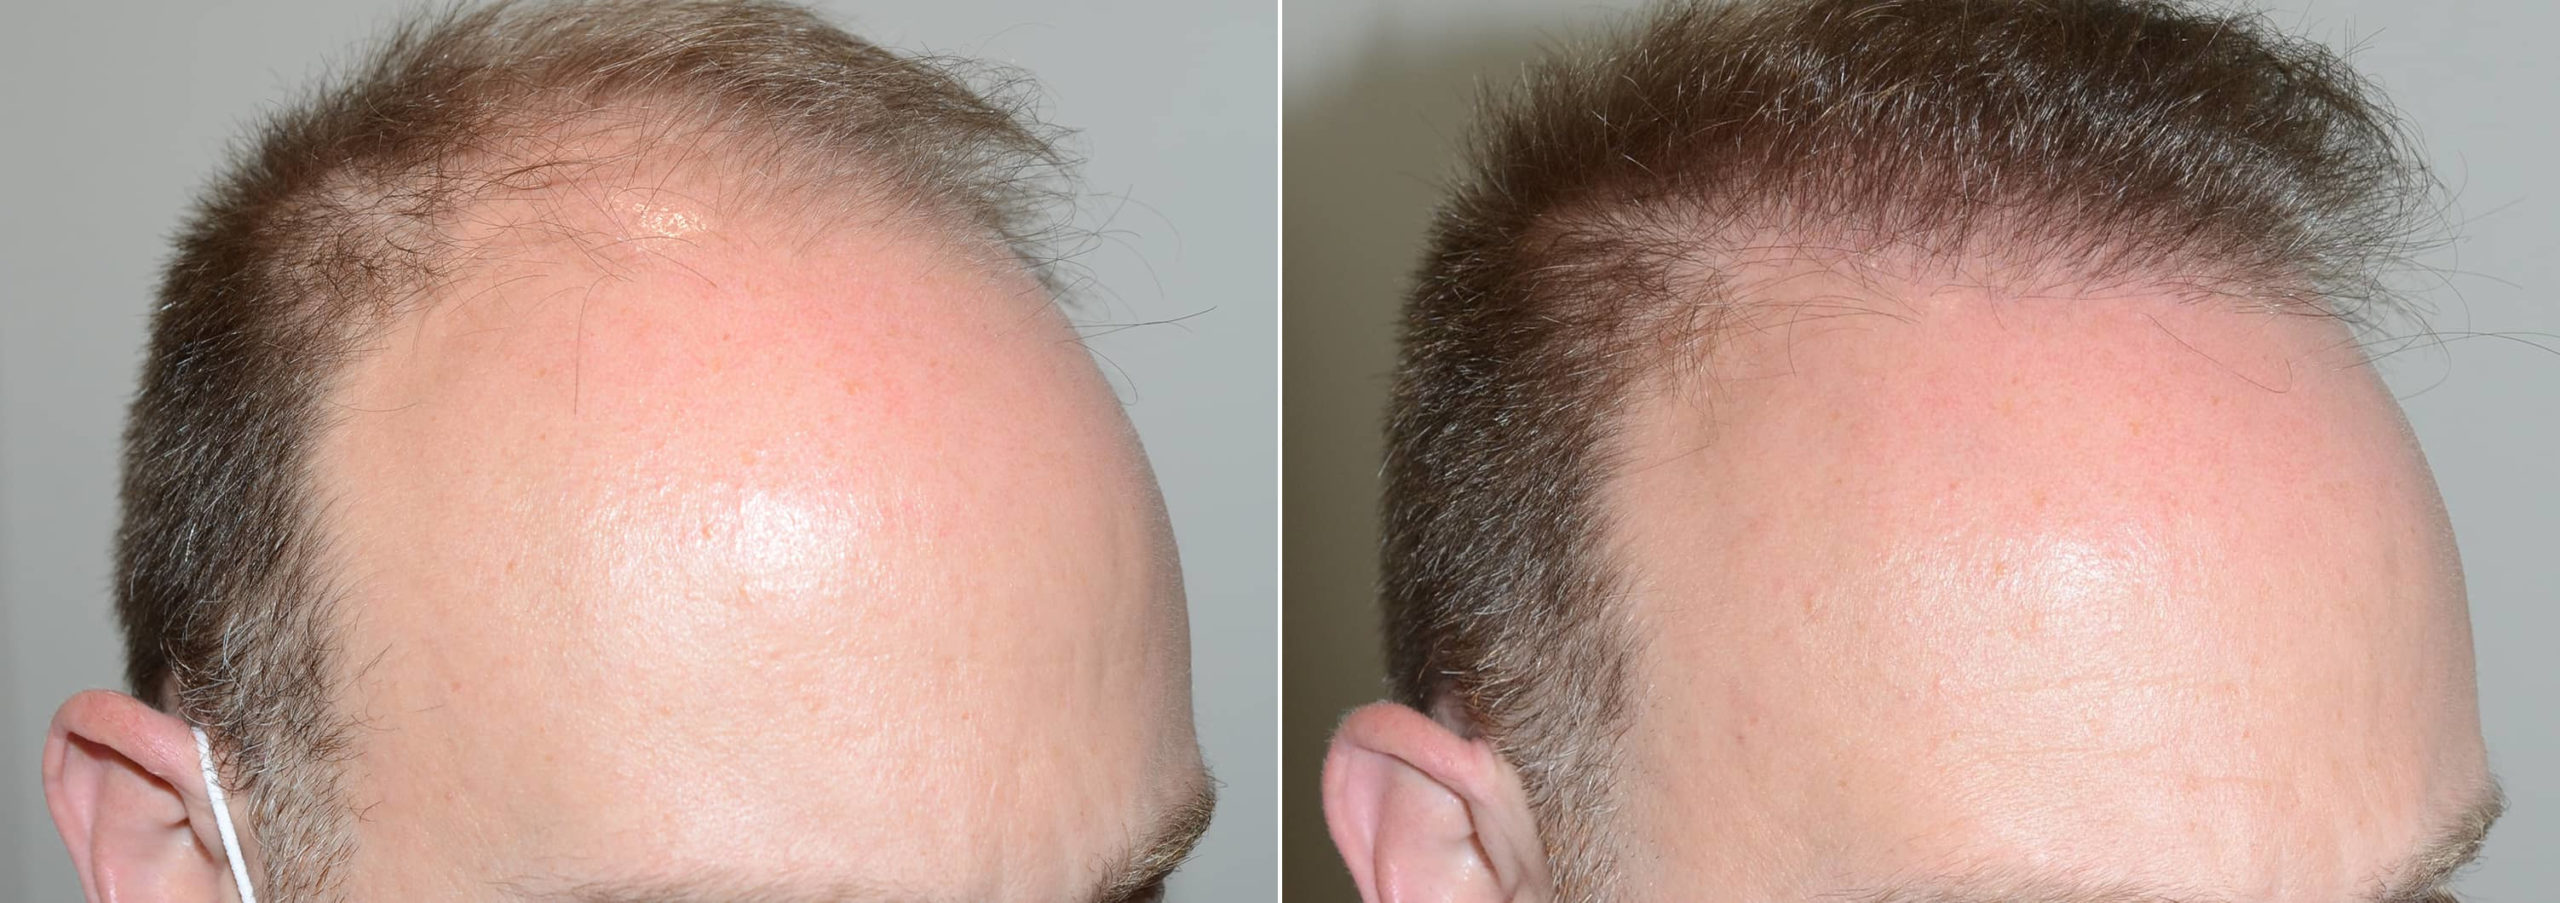 Hair Transplants For Men Pictures Miami Fl Paciente 117344